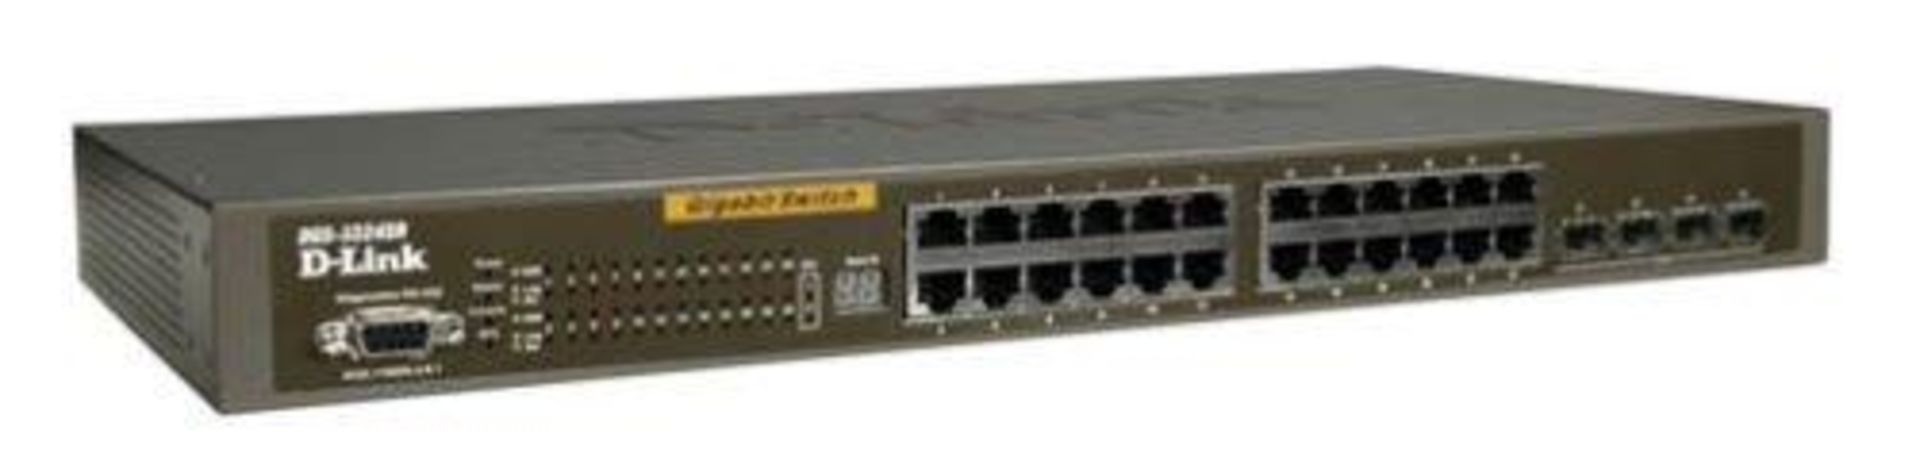 D Link DGS 3324SR 24 Port Ethernet Switch xStack Managed Layer 3 Gigabit - USED - FULL WORKING ORDER